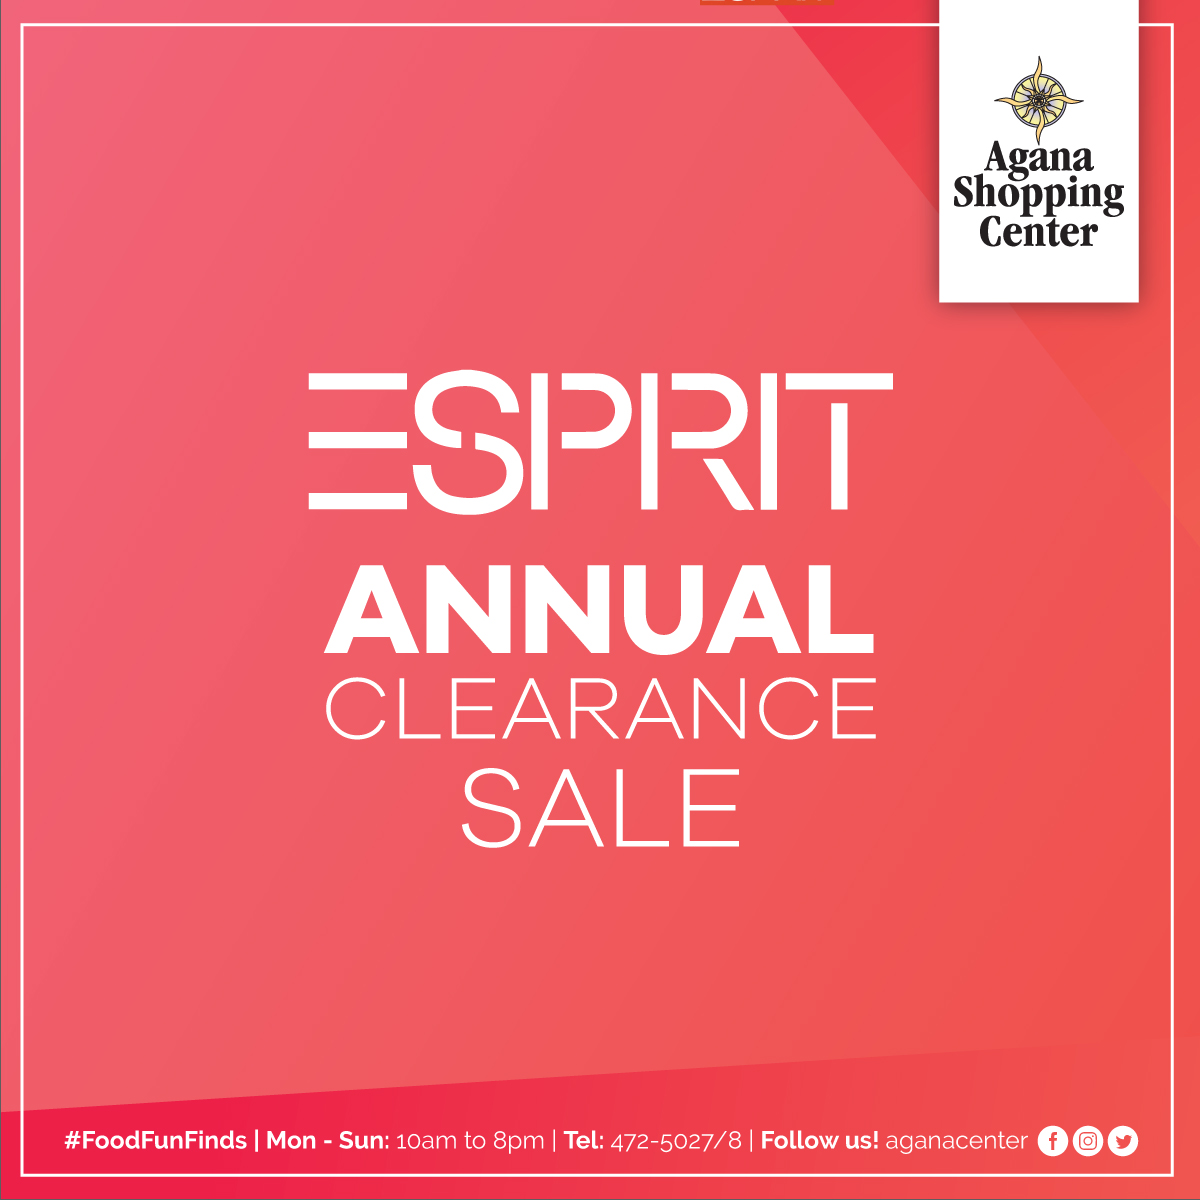 Esprit - Annual Clearance Sale - Agana Shopping Center